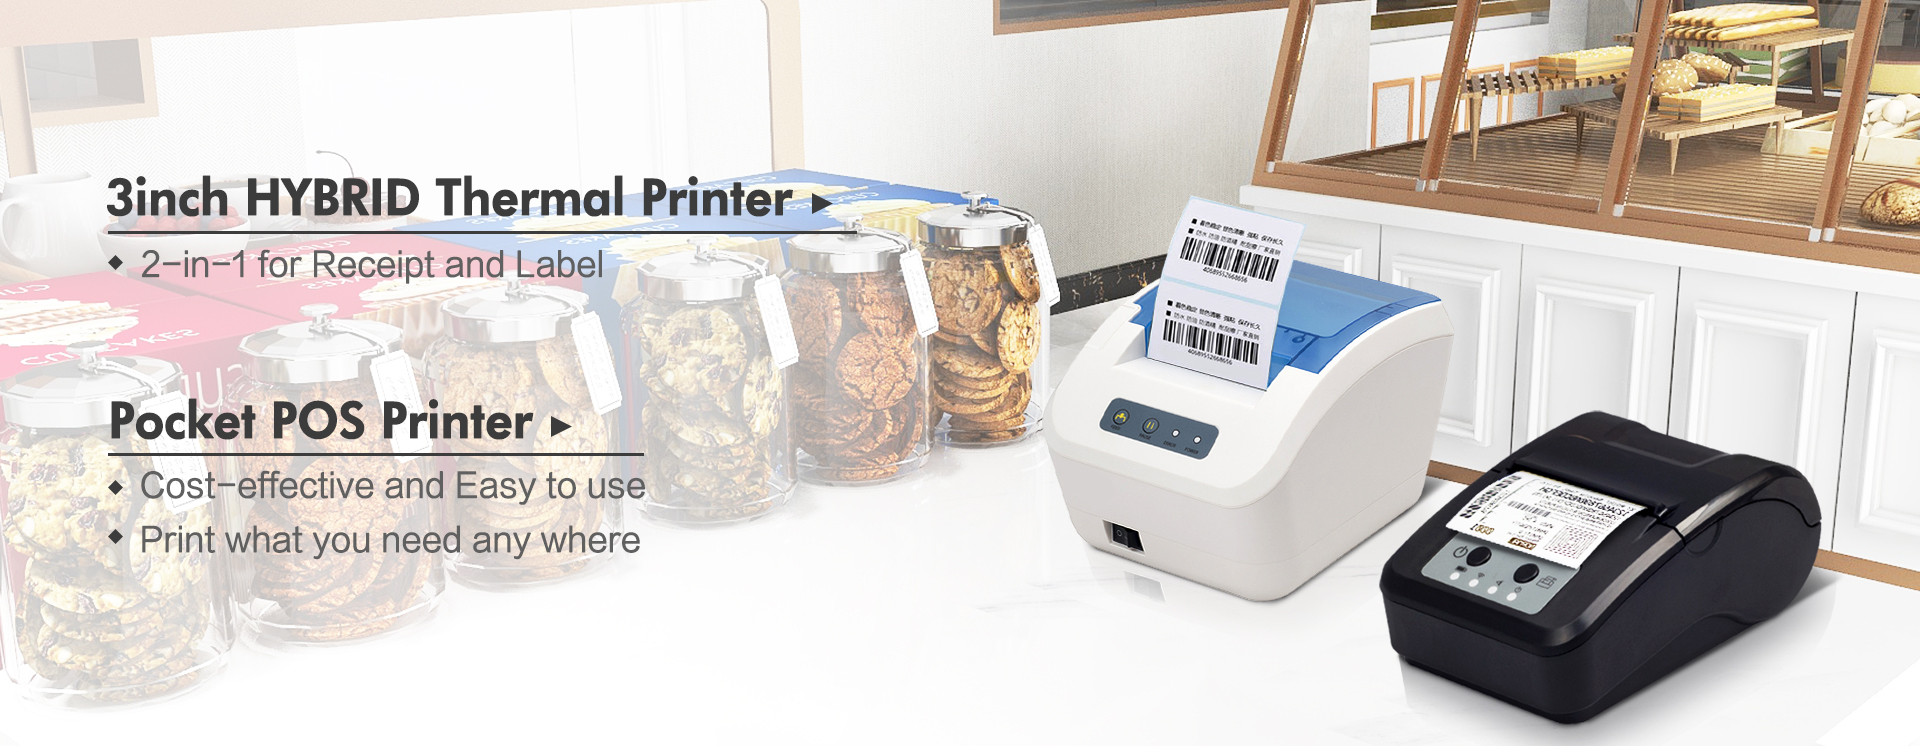 UNISMAR - Professional supplier of POS & Label printer